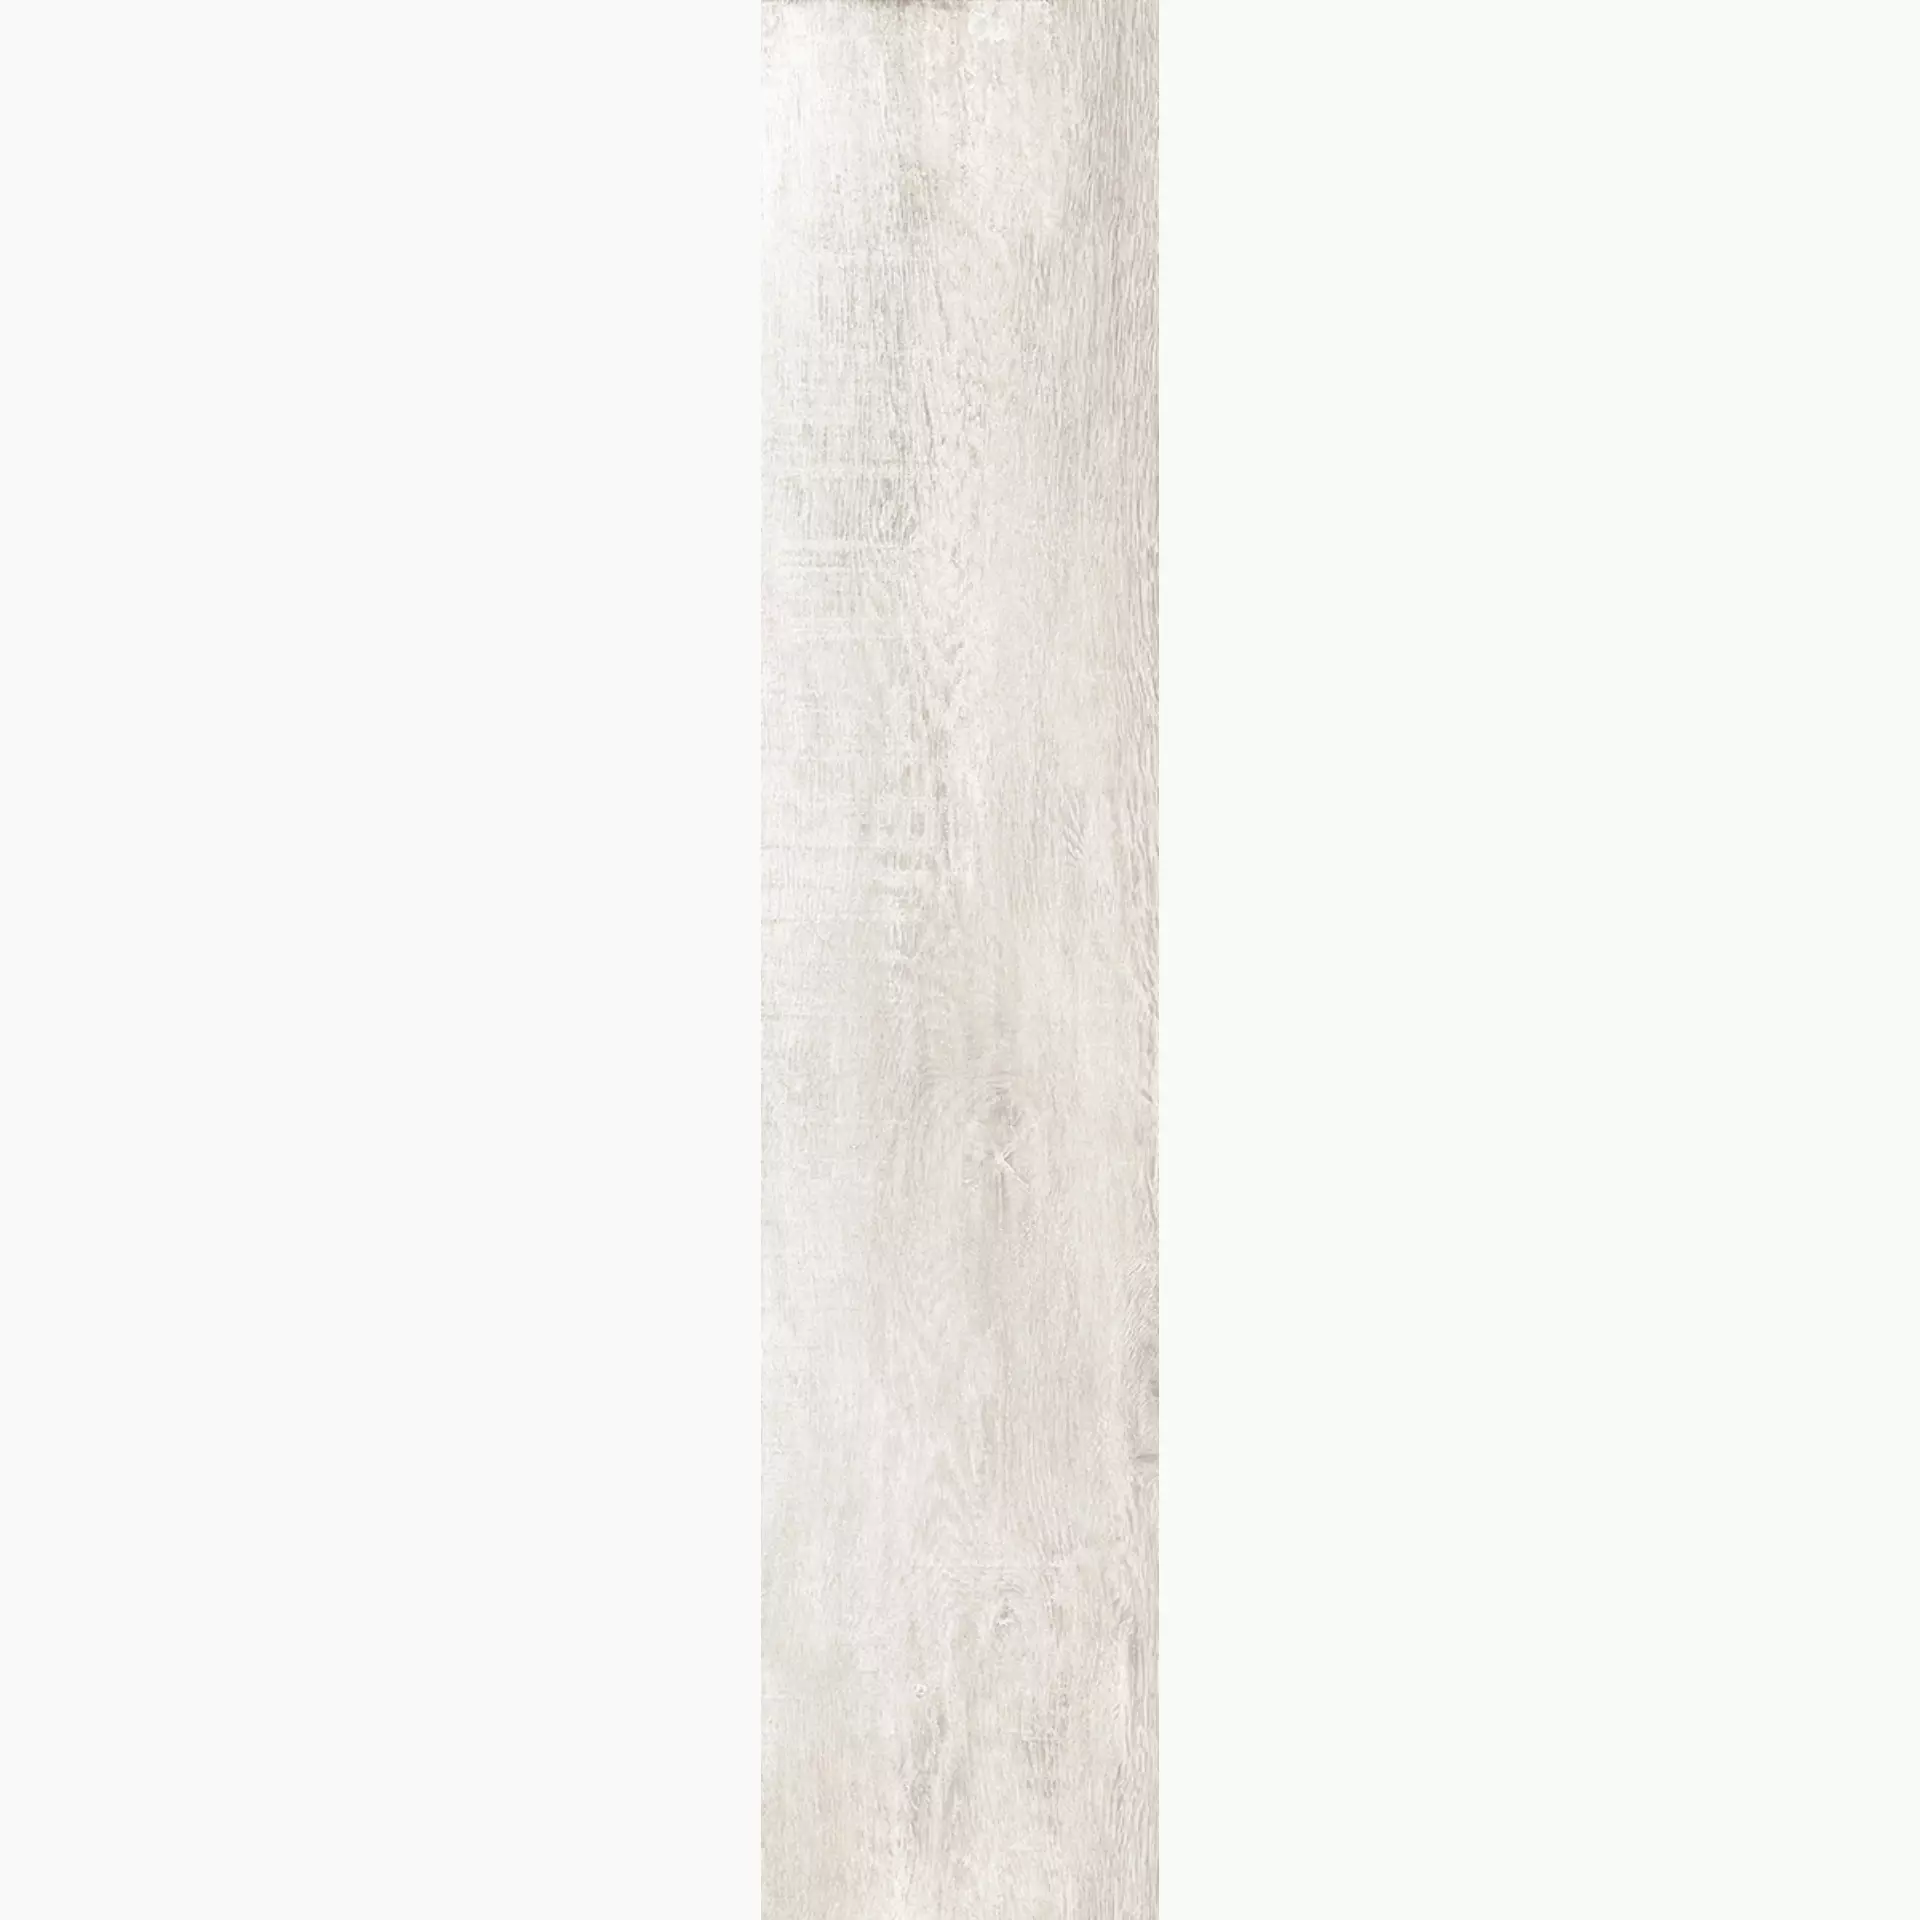 Rondine Greenwood Bianco Naturale J86459 24x120cm 9,5mm